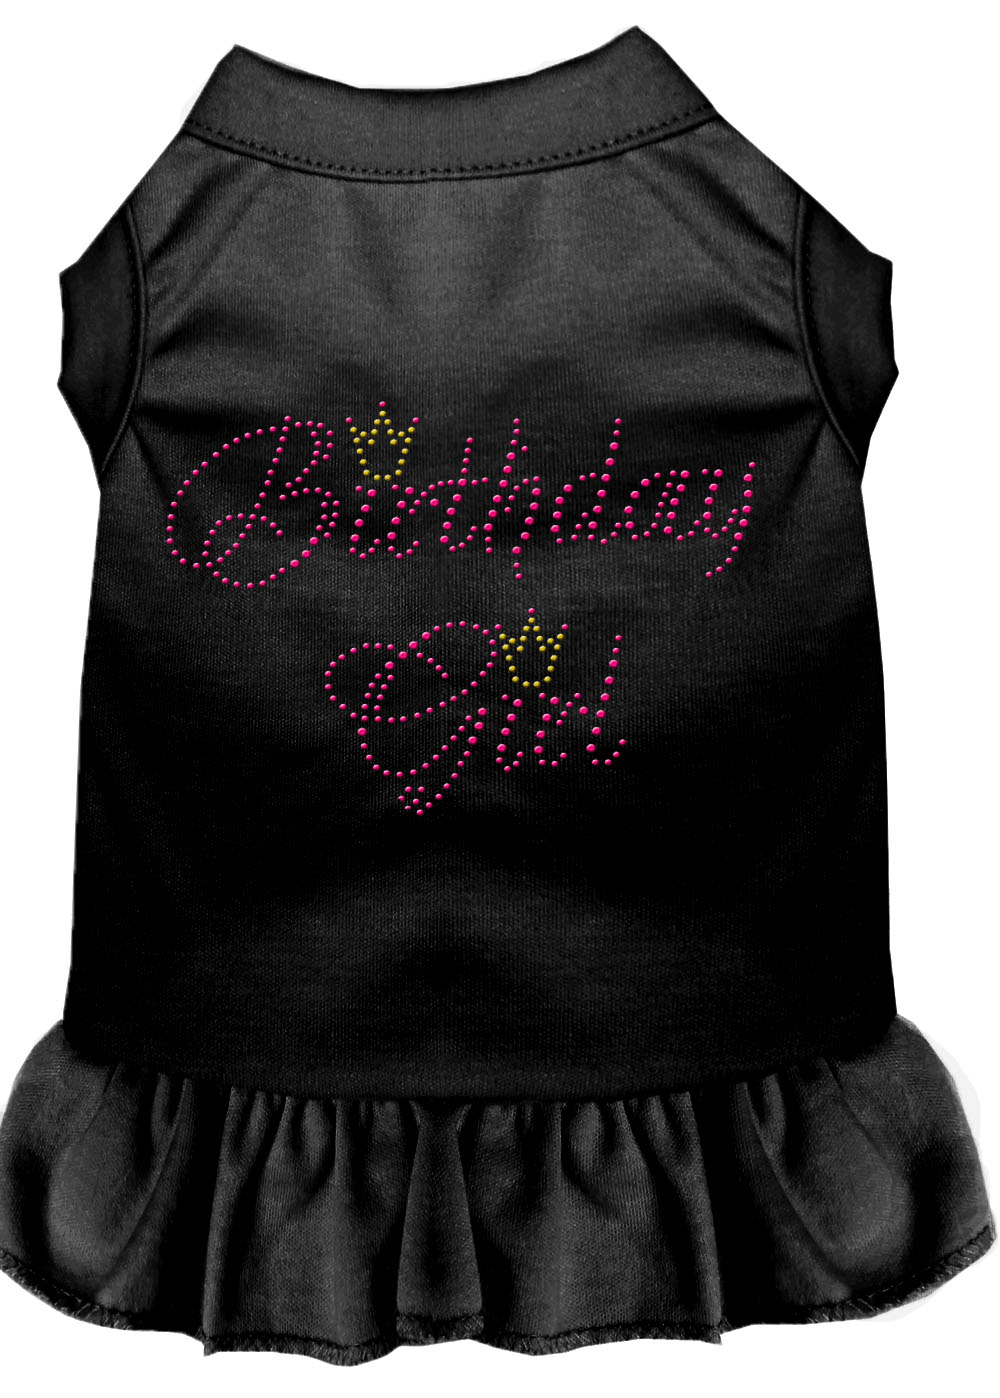 Birthday Girl Rhinestone Dress Black XL